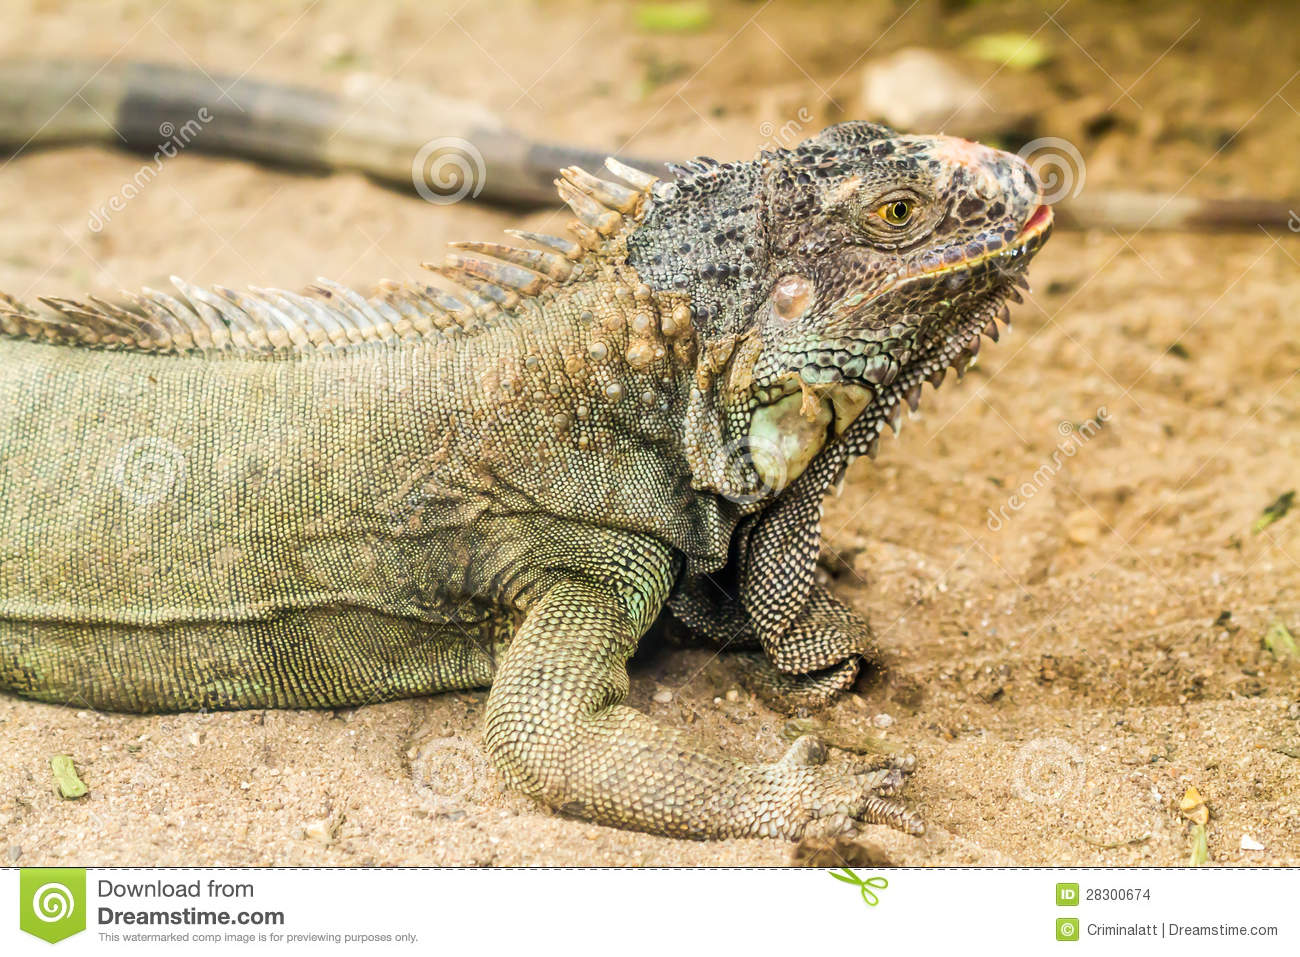 Iguana Lizard Stand Still On Ground Stock Images   Image  28300674